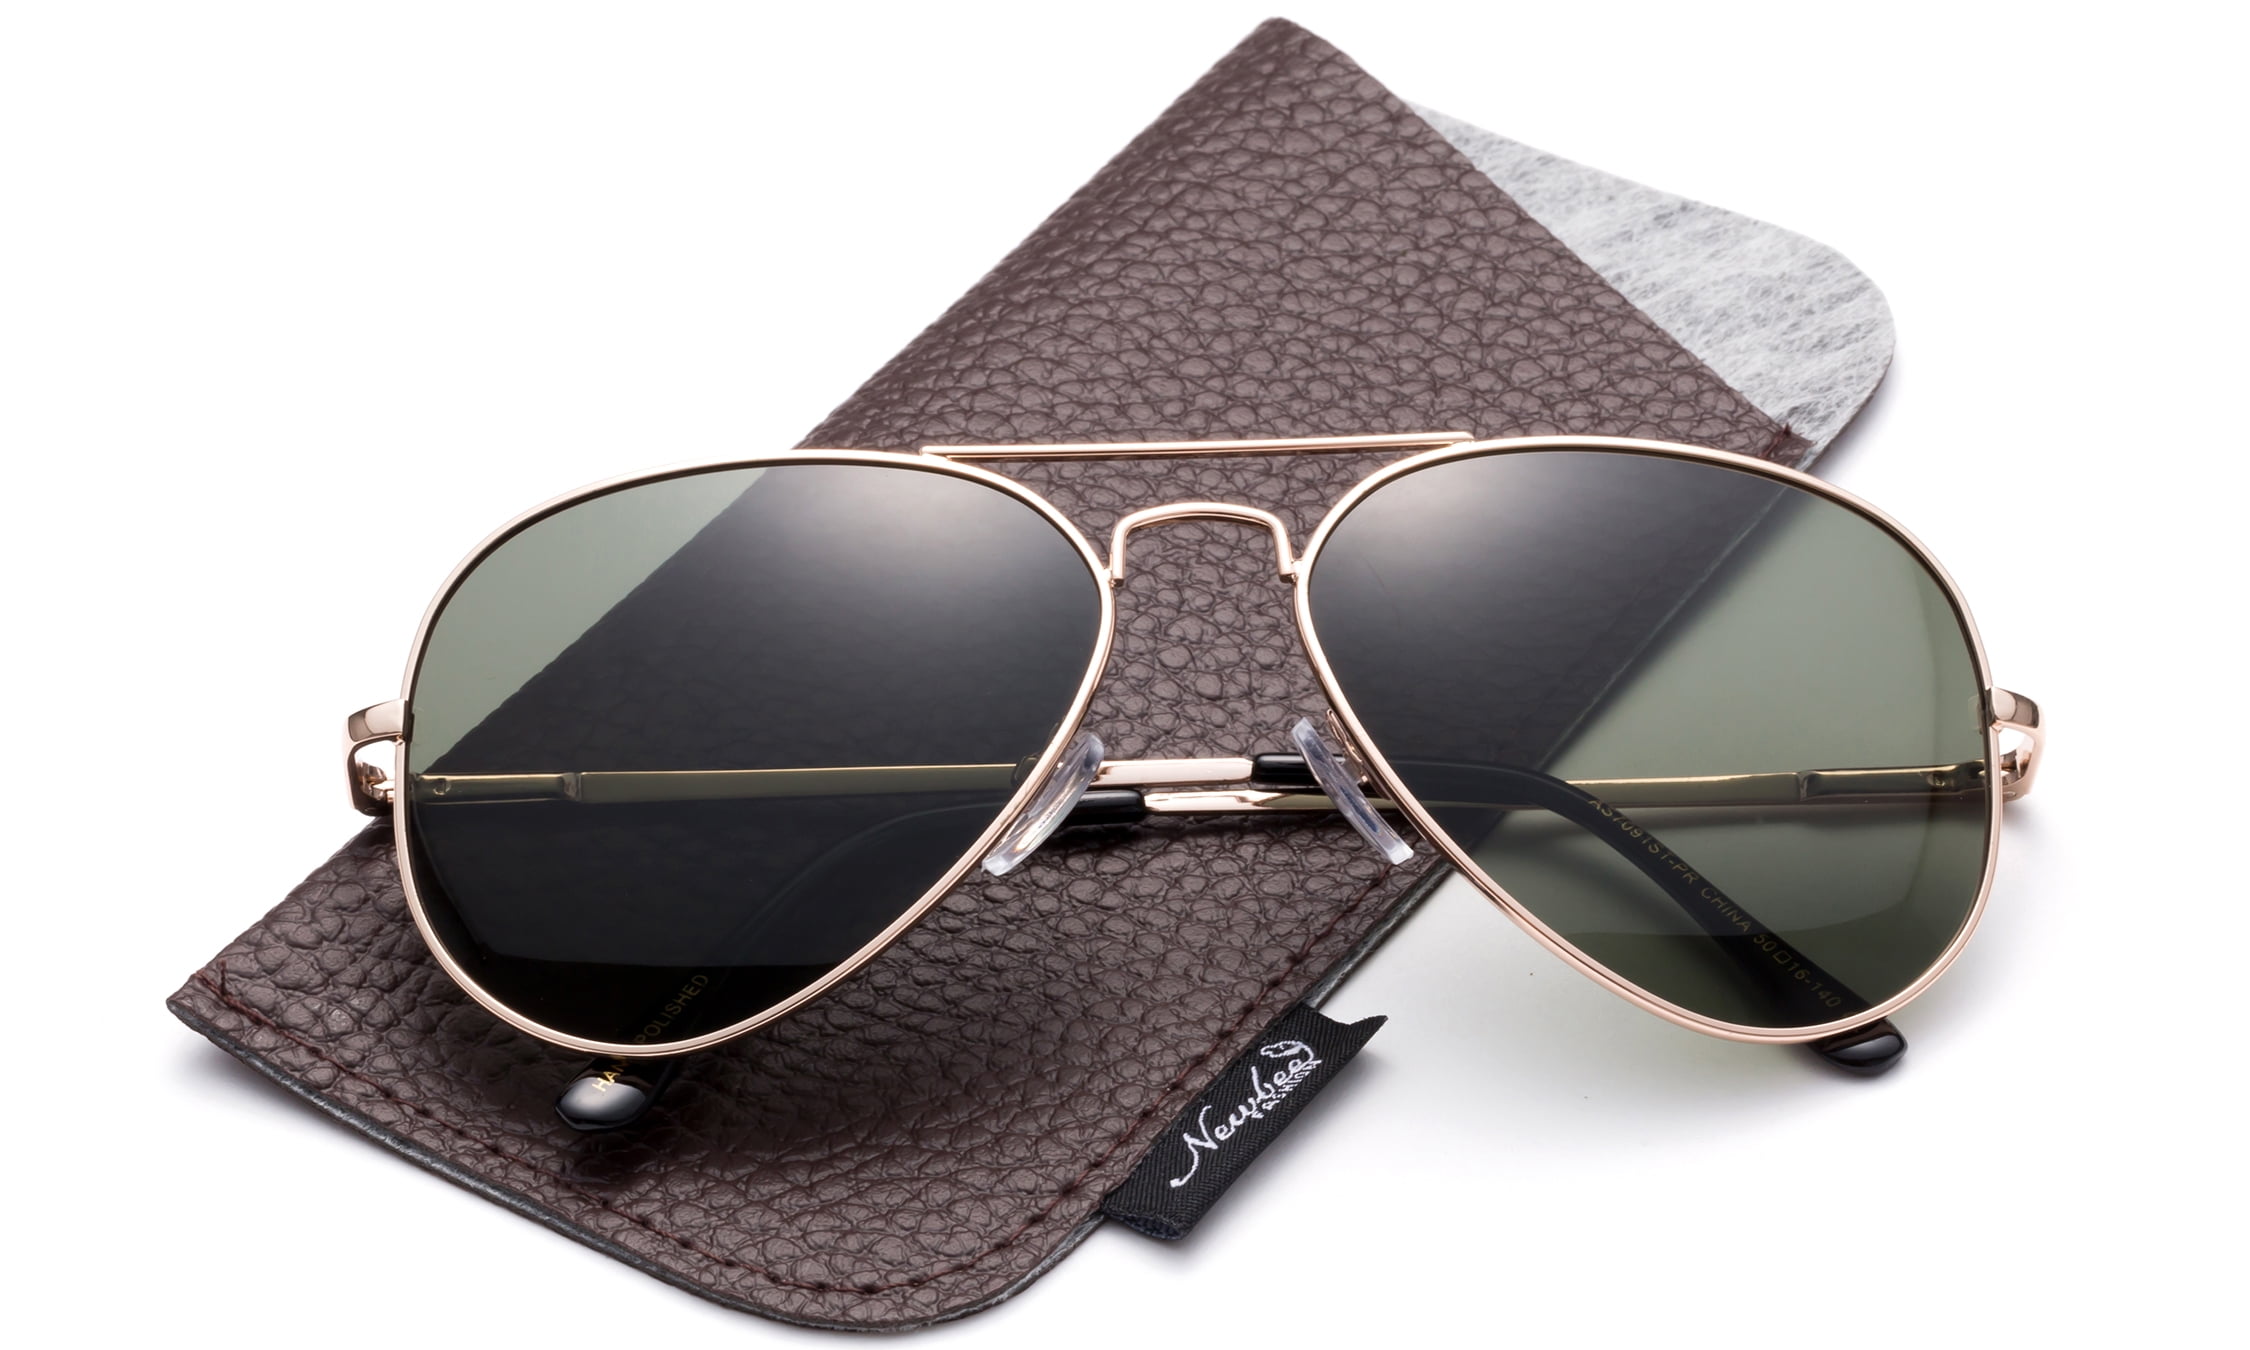 Newbee Fashion Polarized Aviator Sunglasses Mirrored Lens Classic